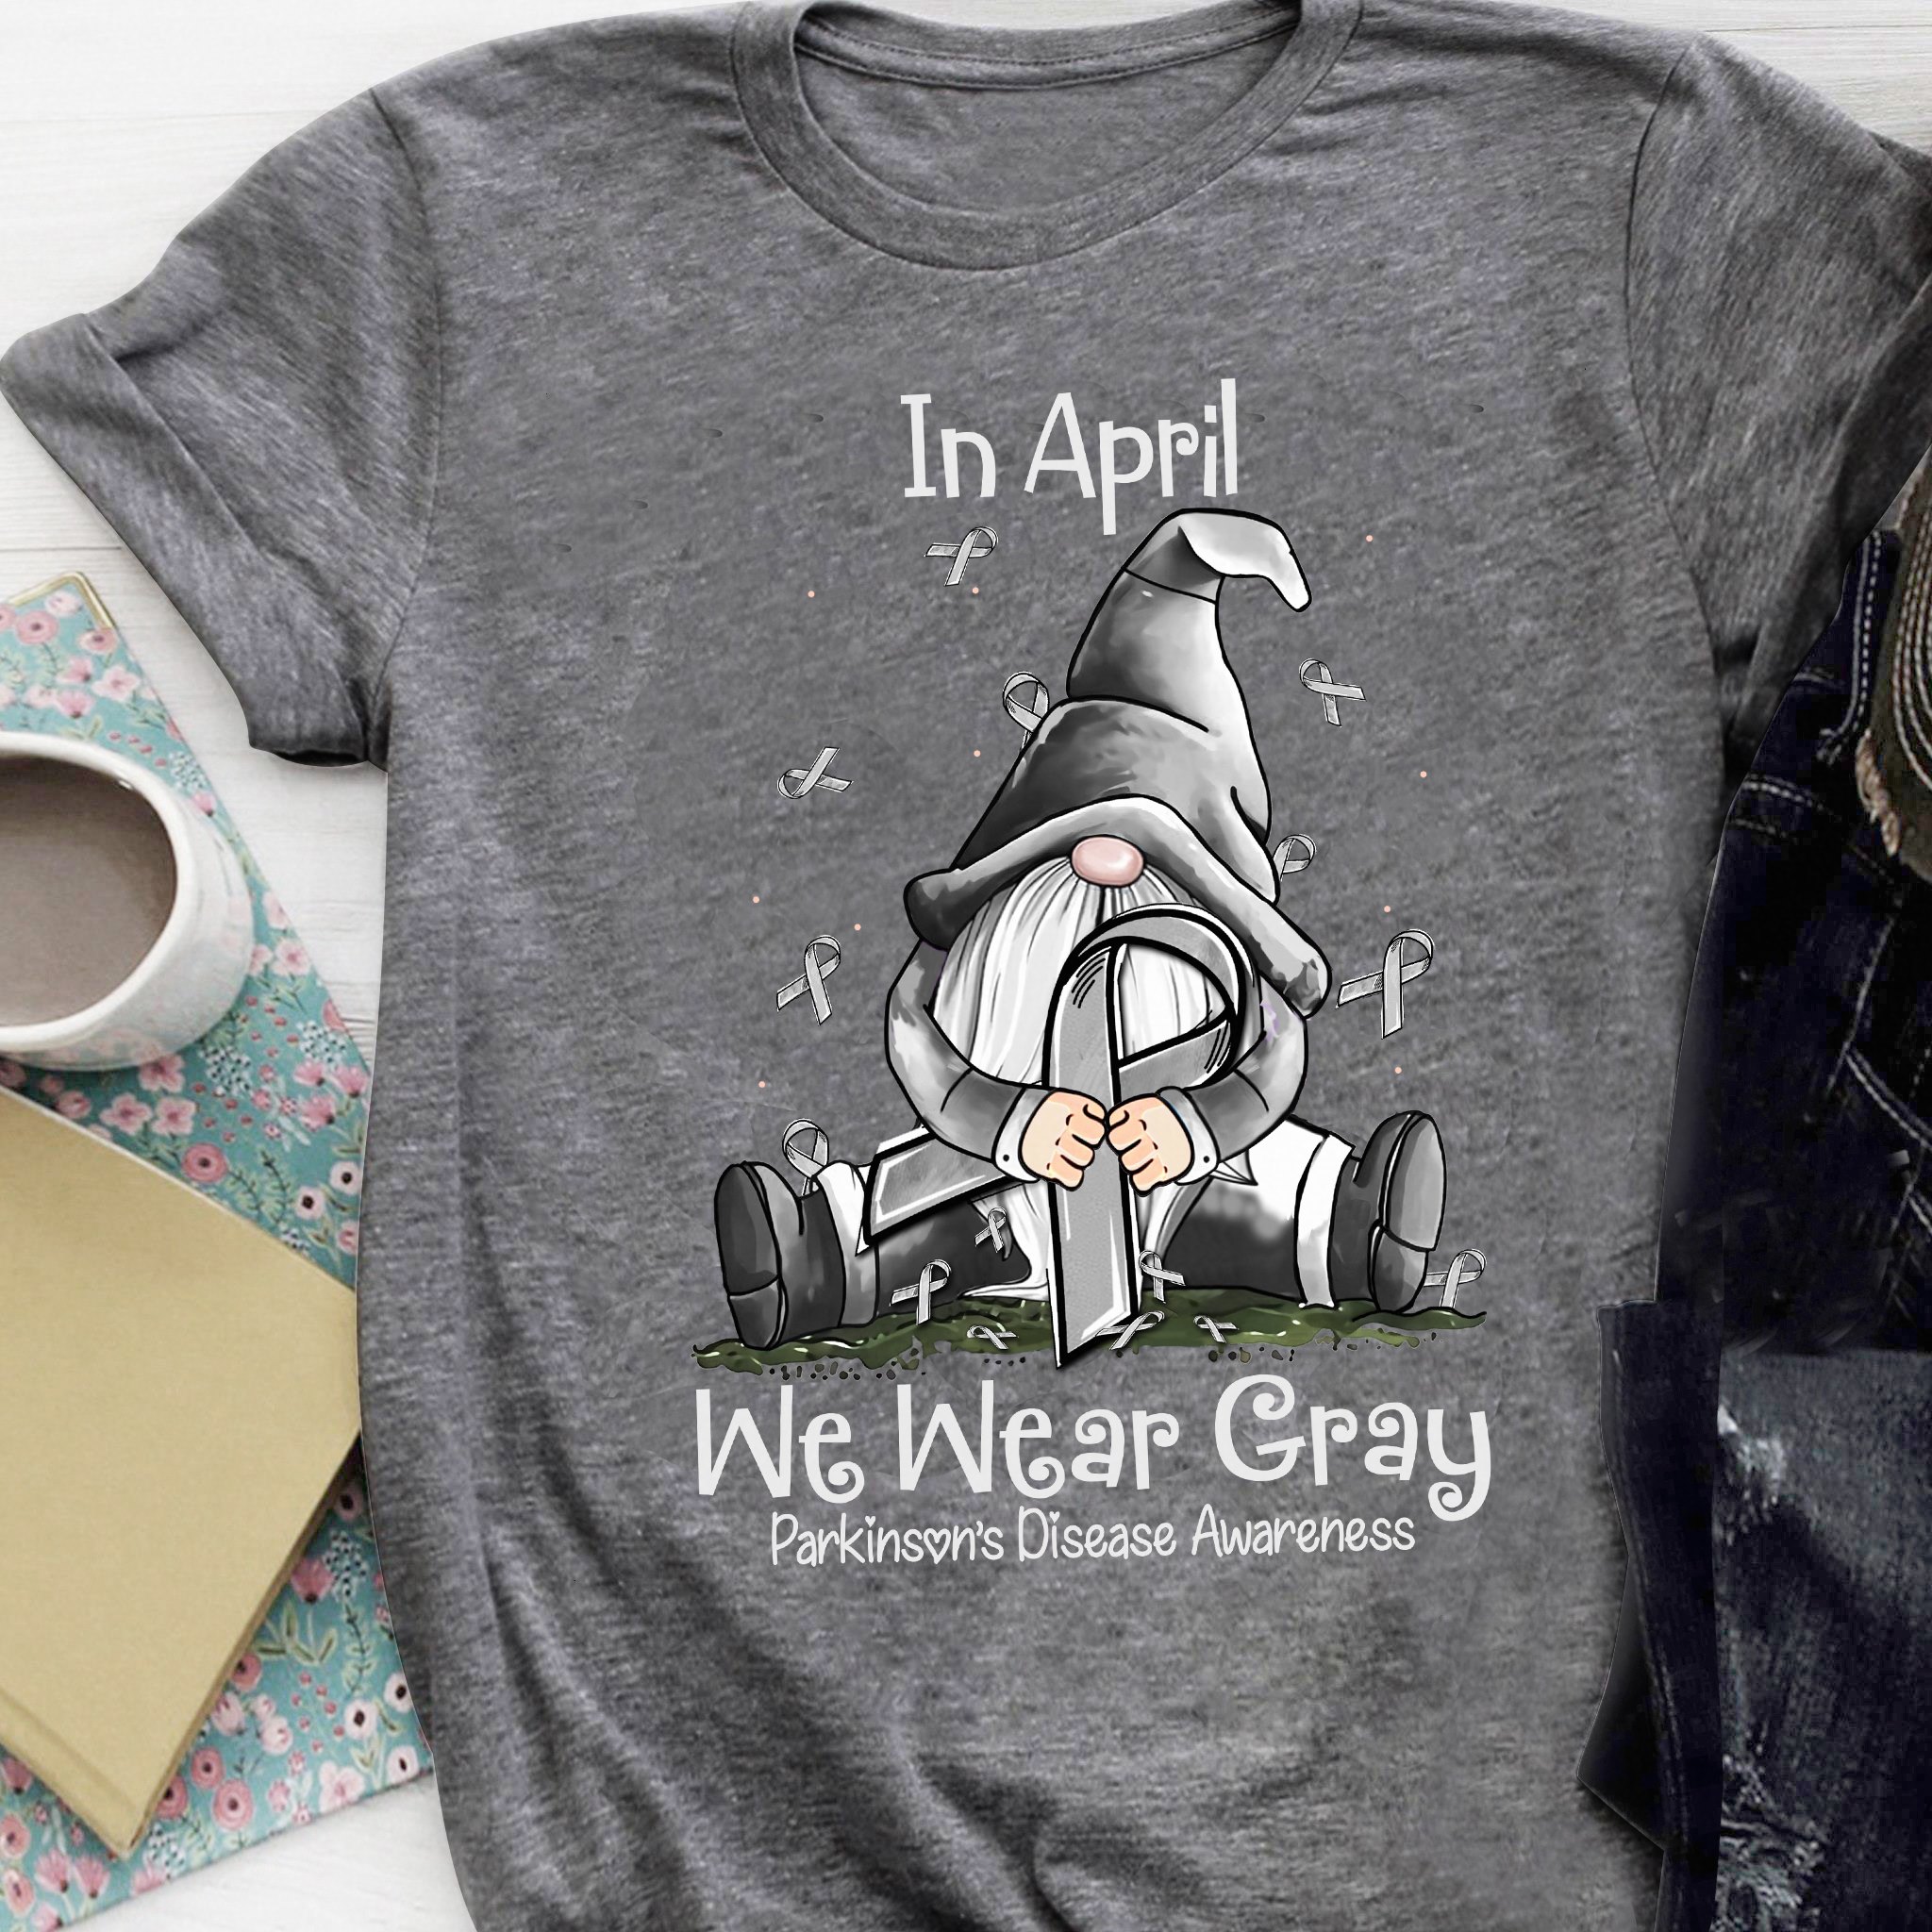 In April we wear gray - Parkinson's disease awareness, Garden gnome